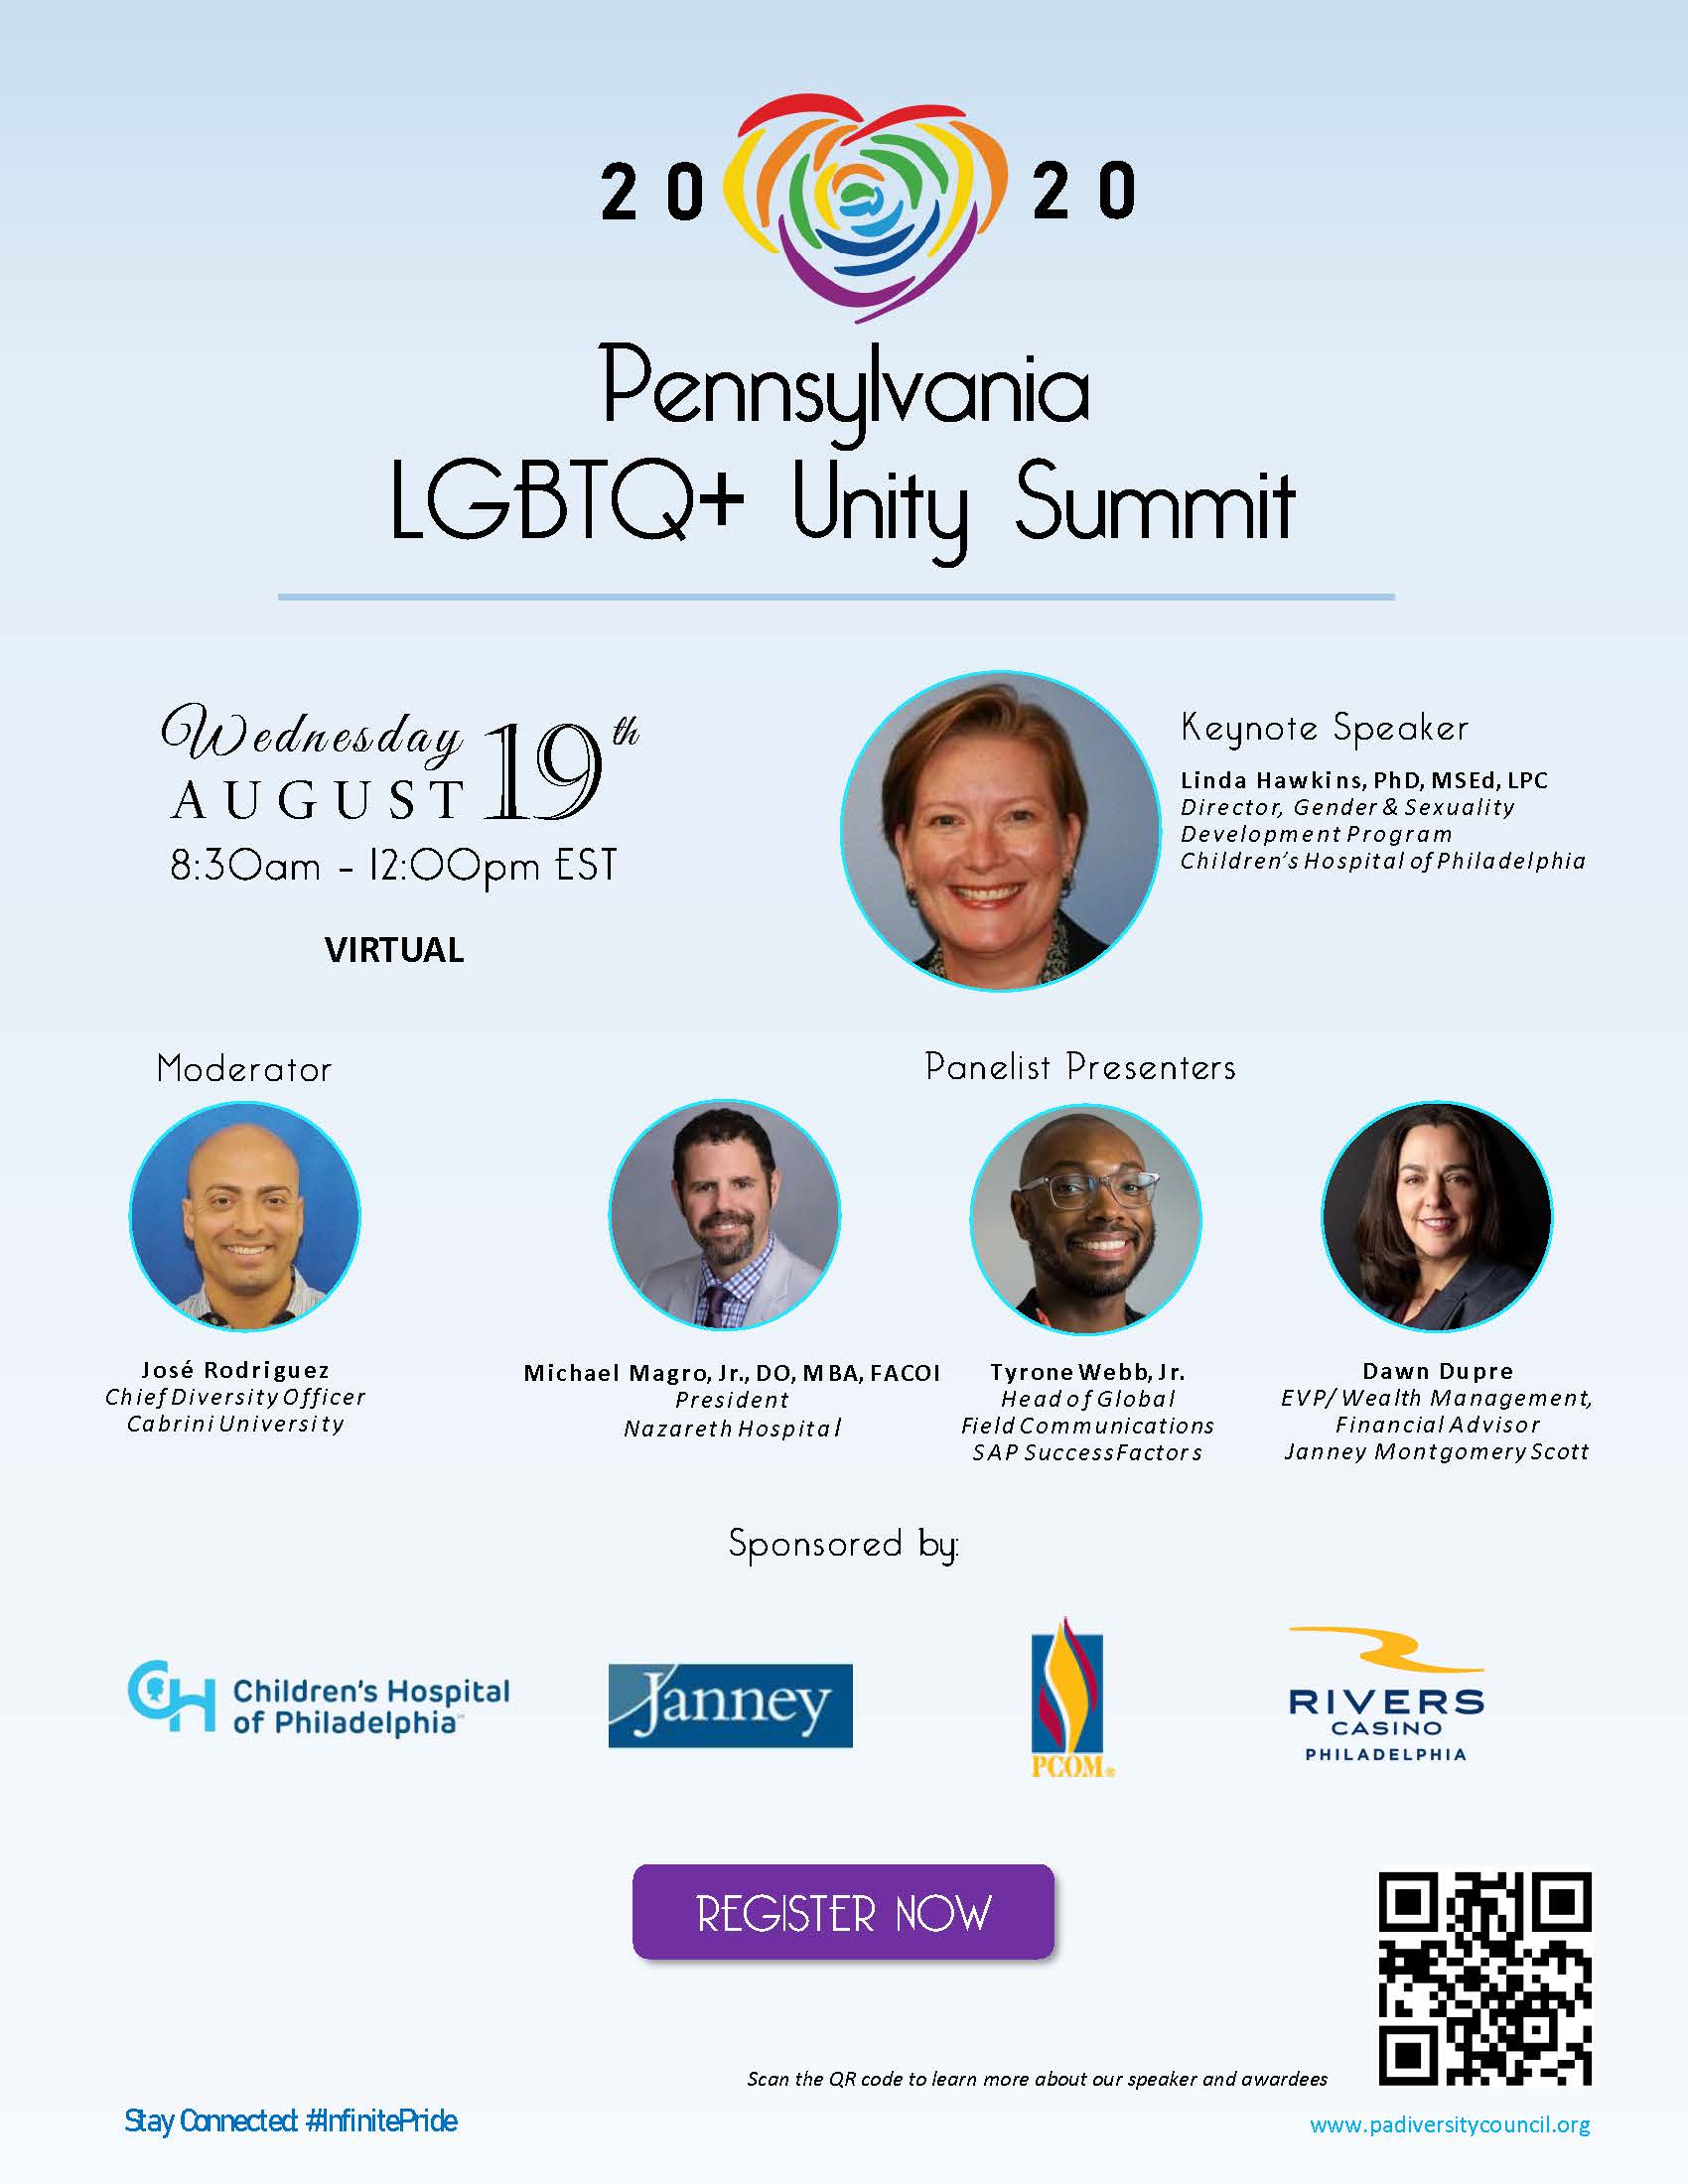 Pennsylvania LGBTQ+ Virtual Unity Summit